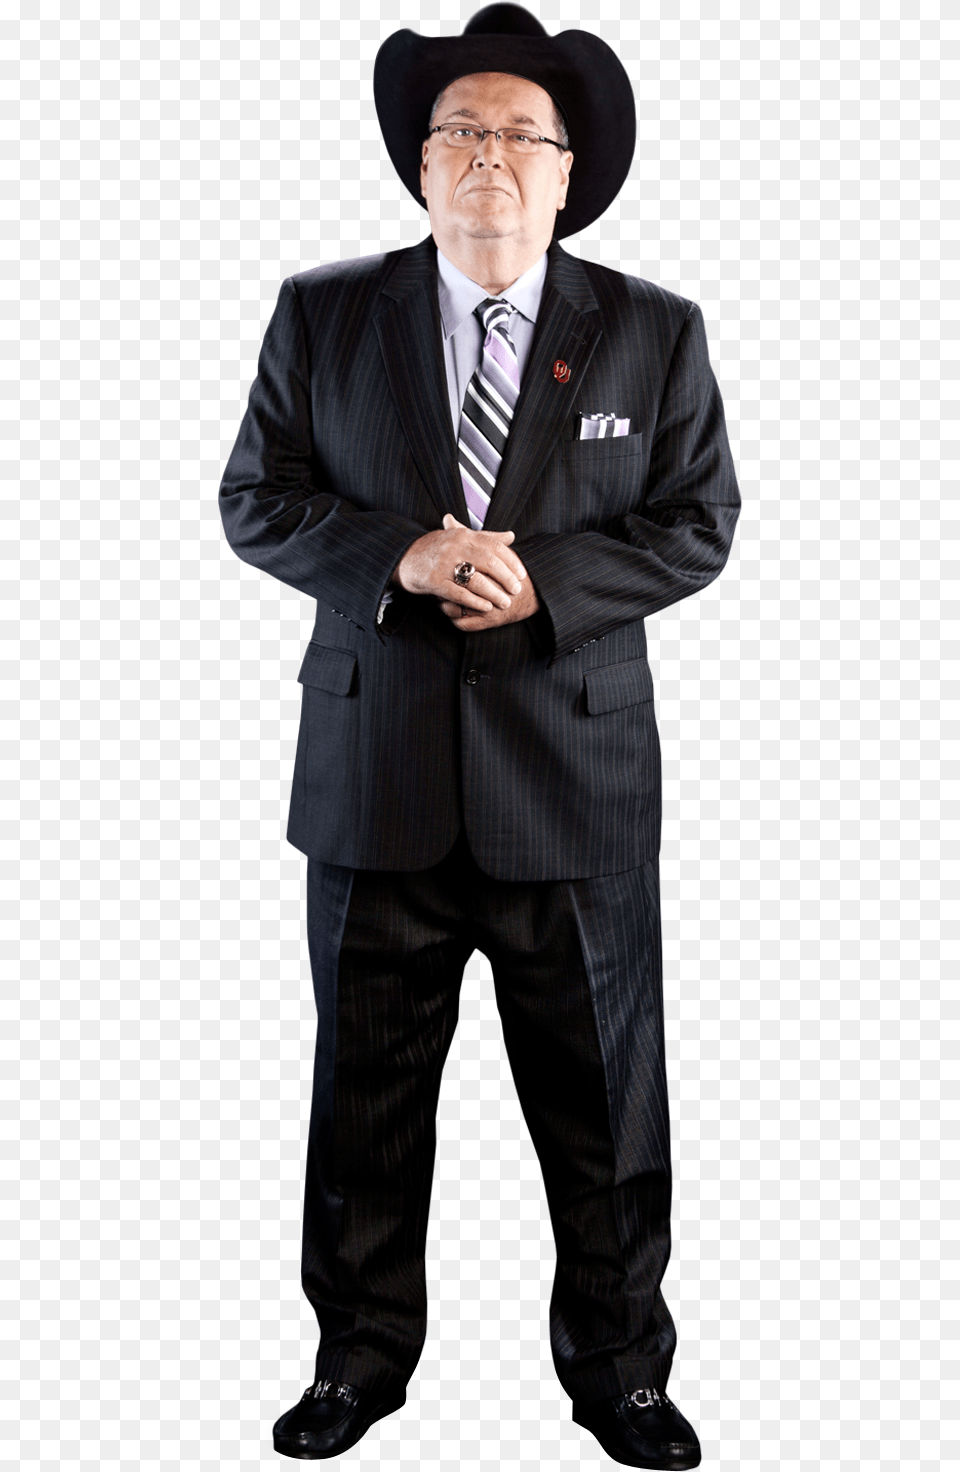 Jim Ross 2 Jim Ross, Tuxedo, Suit, Hat, Formal Wear Png Image